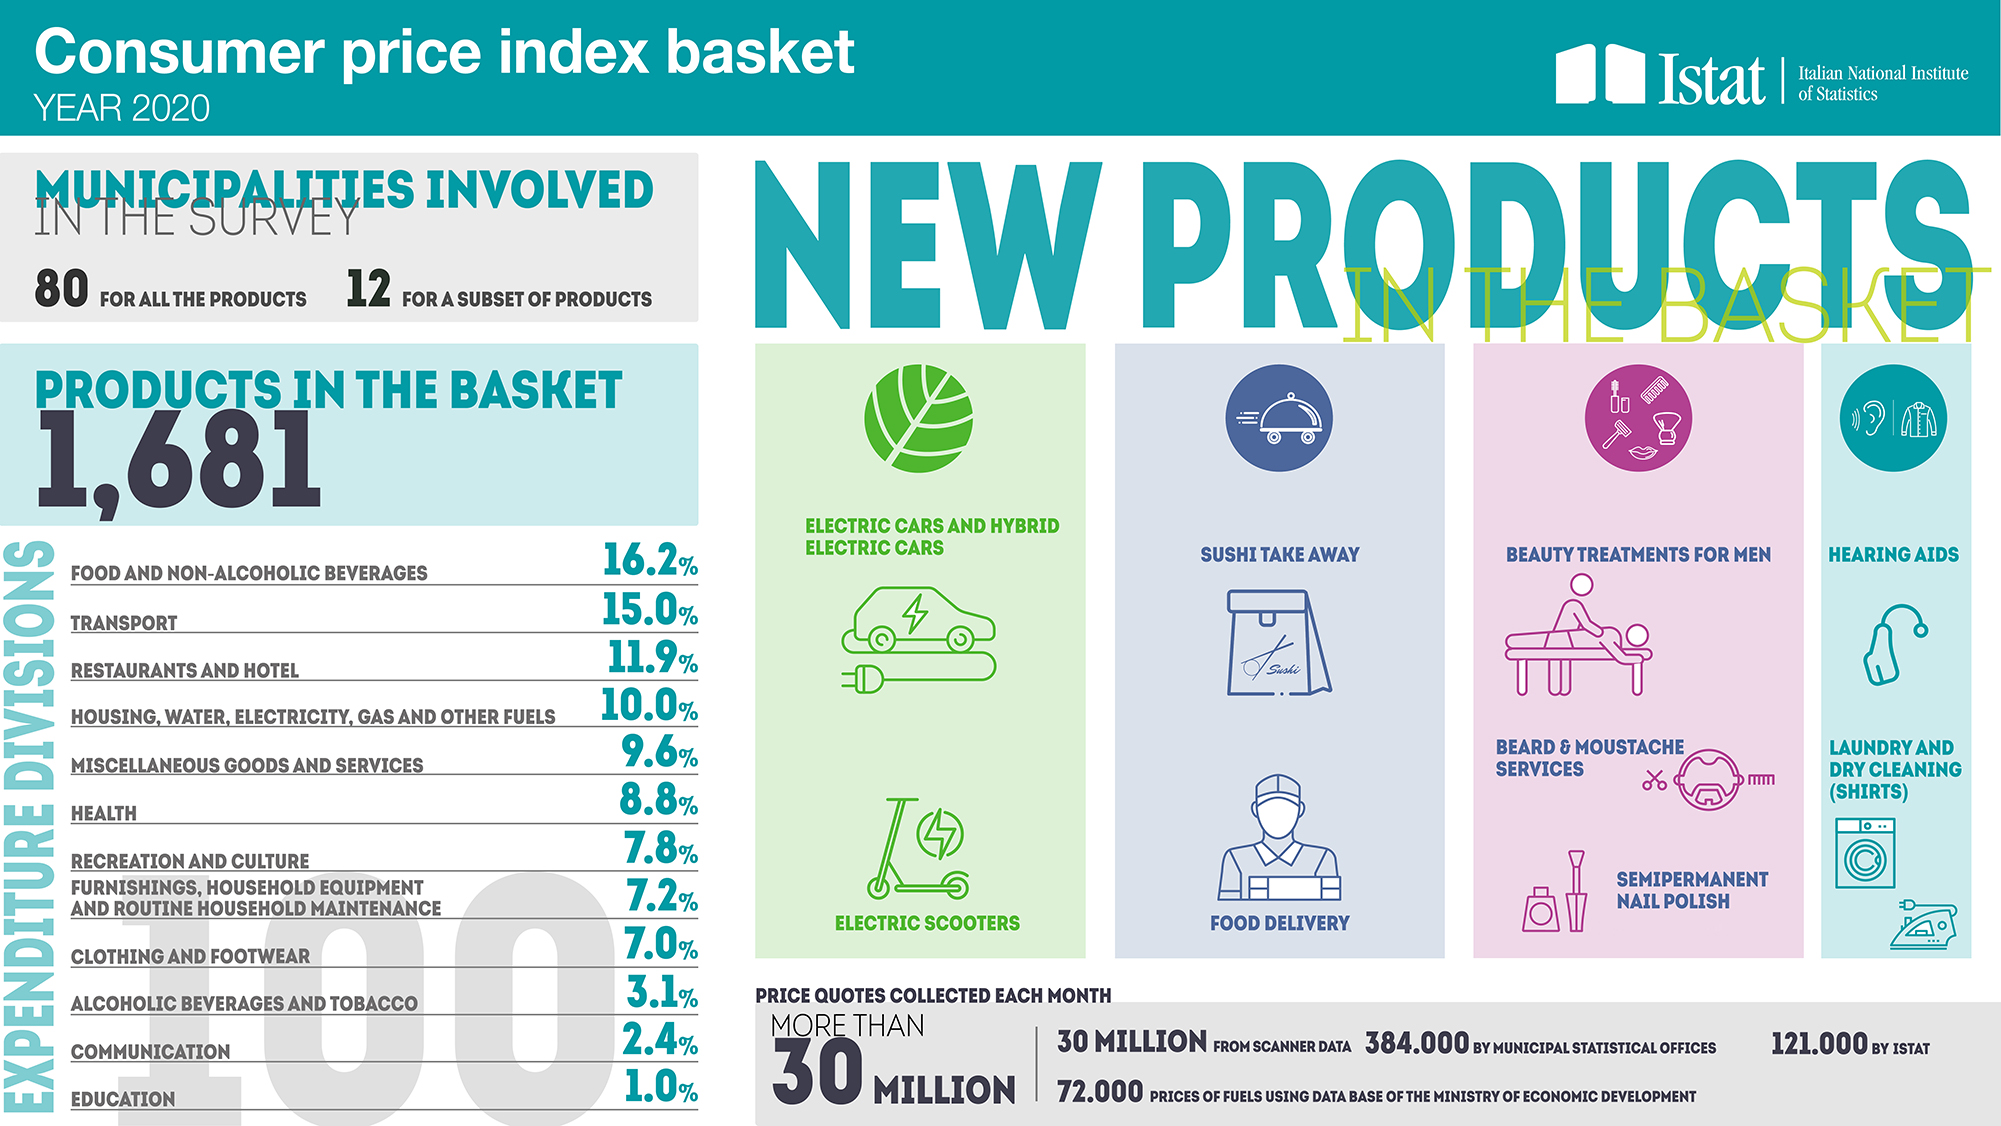 Infographic on consumer price index basket